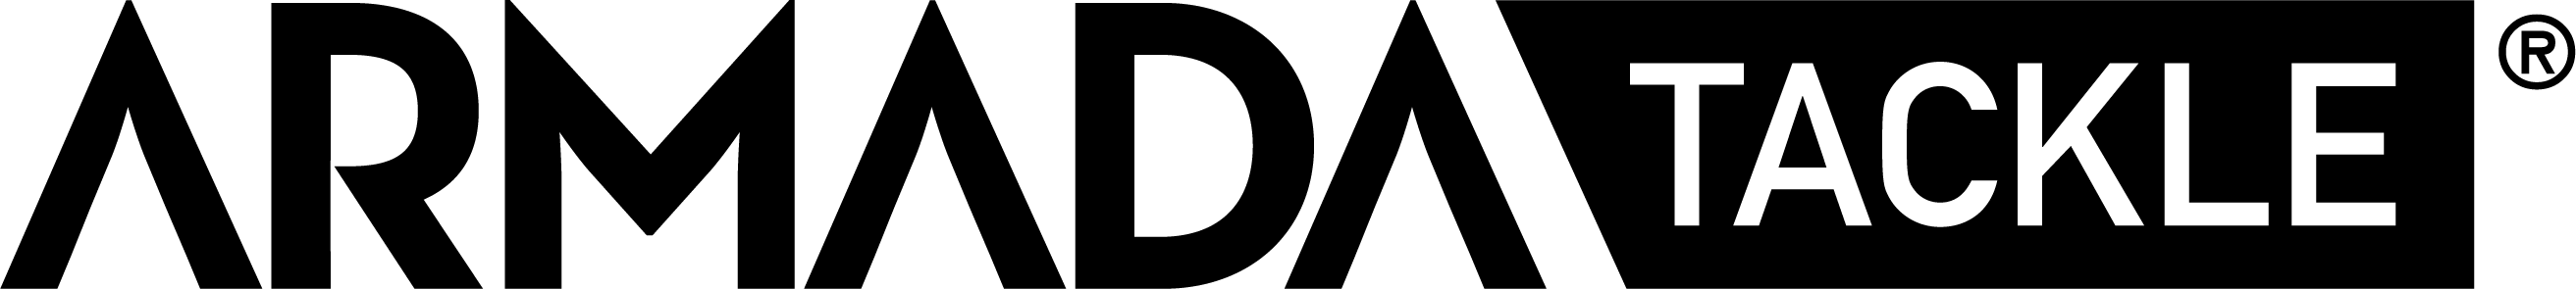 Armada Tackle logo black